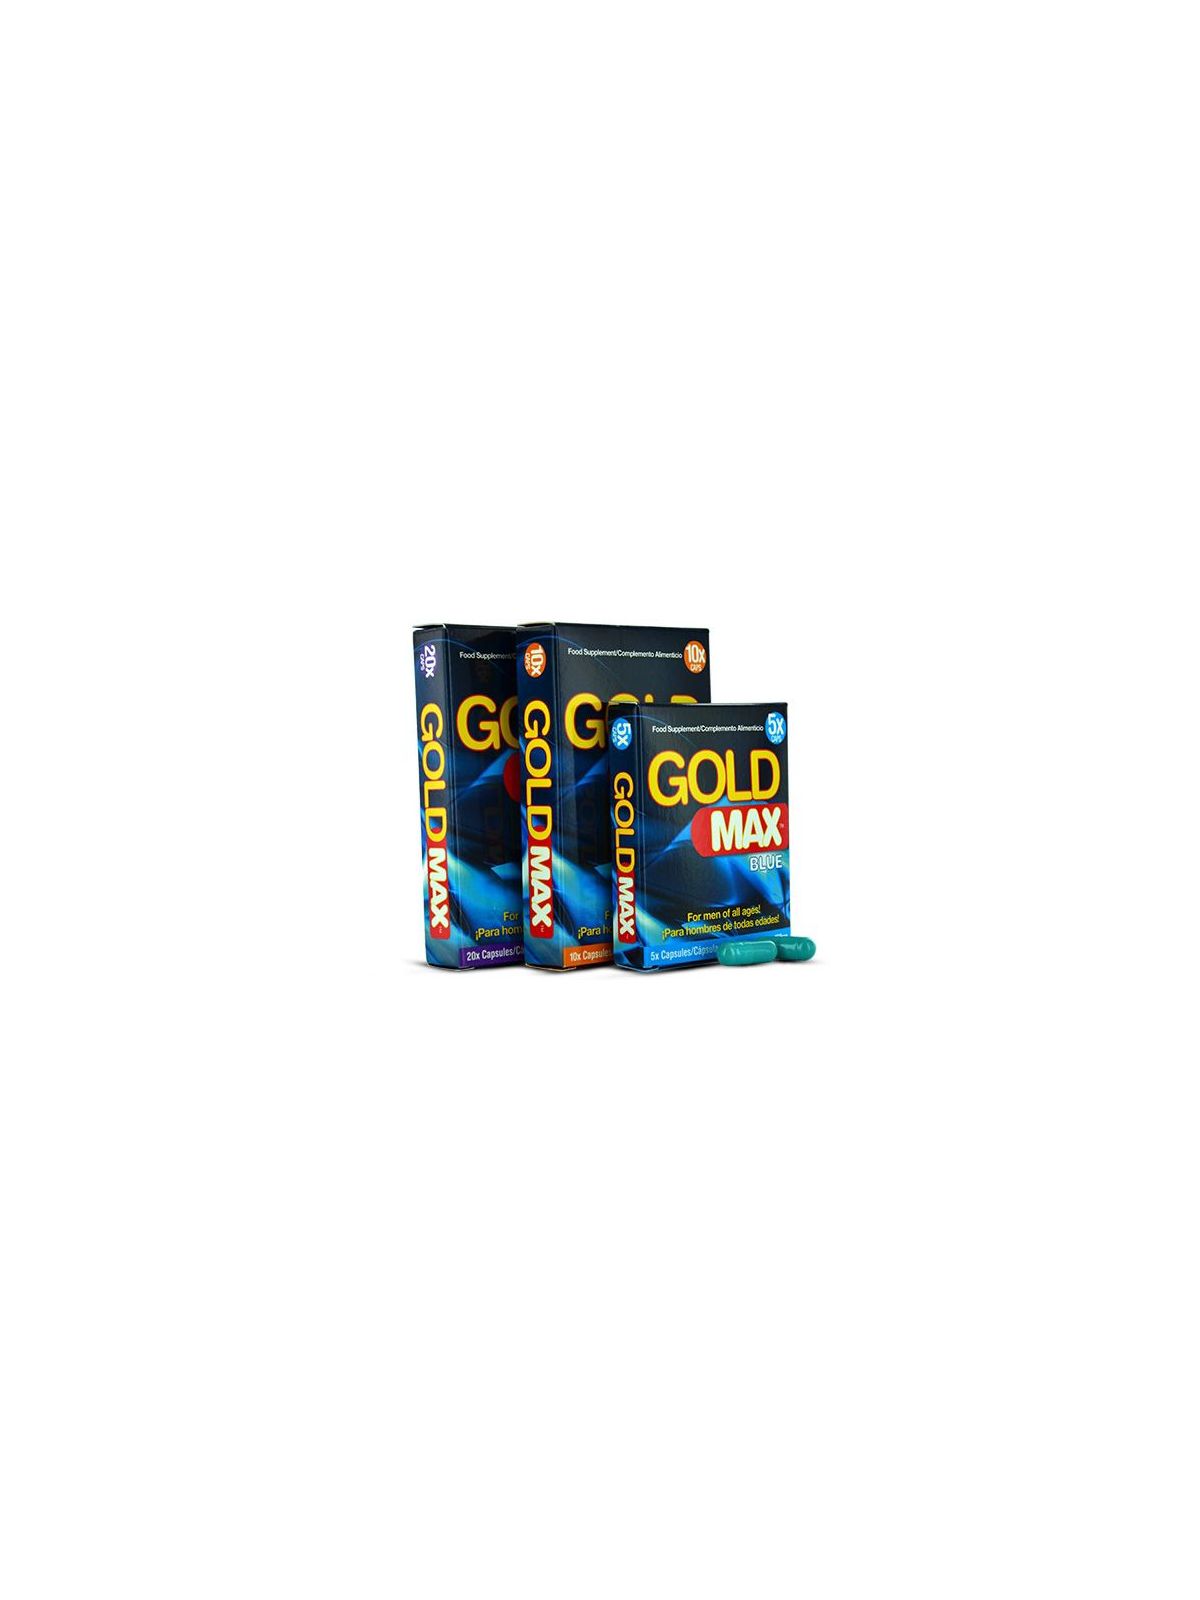 Gold Max Blue Capsules for Men